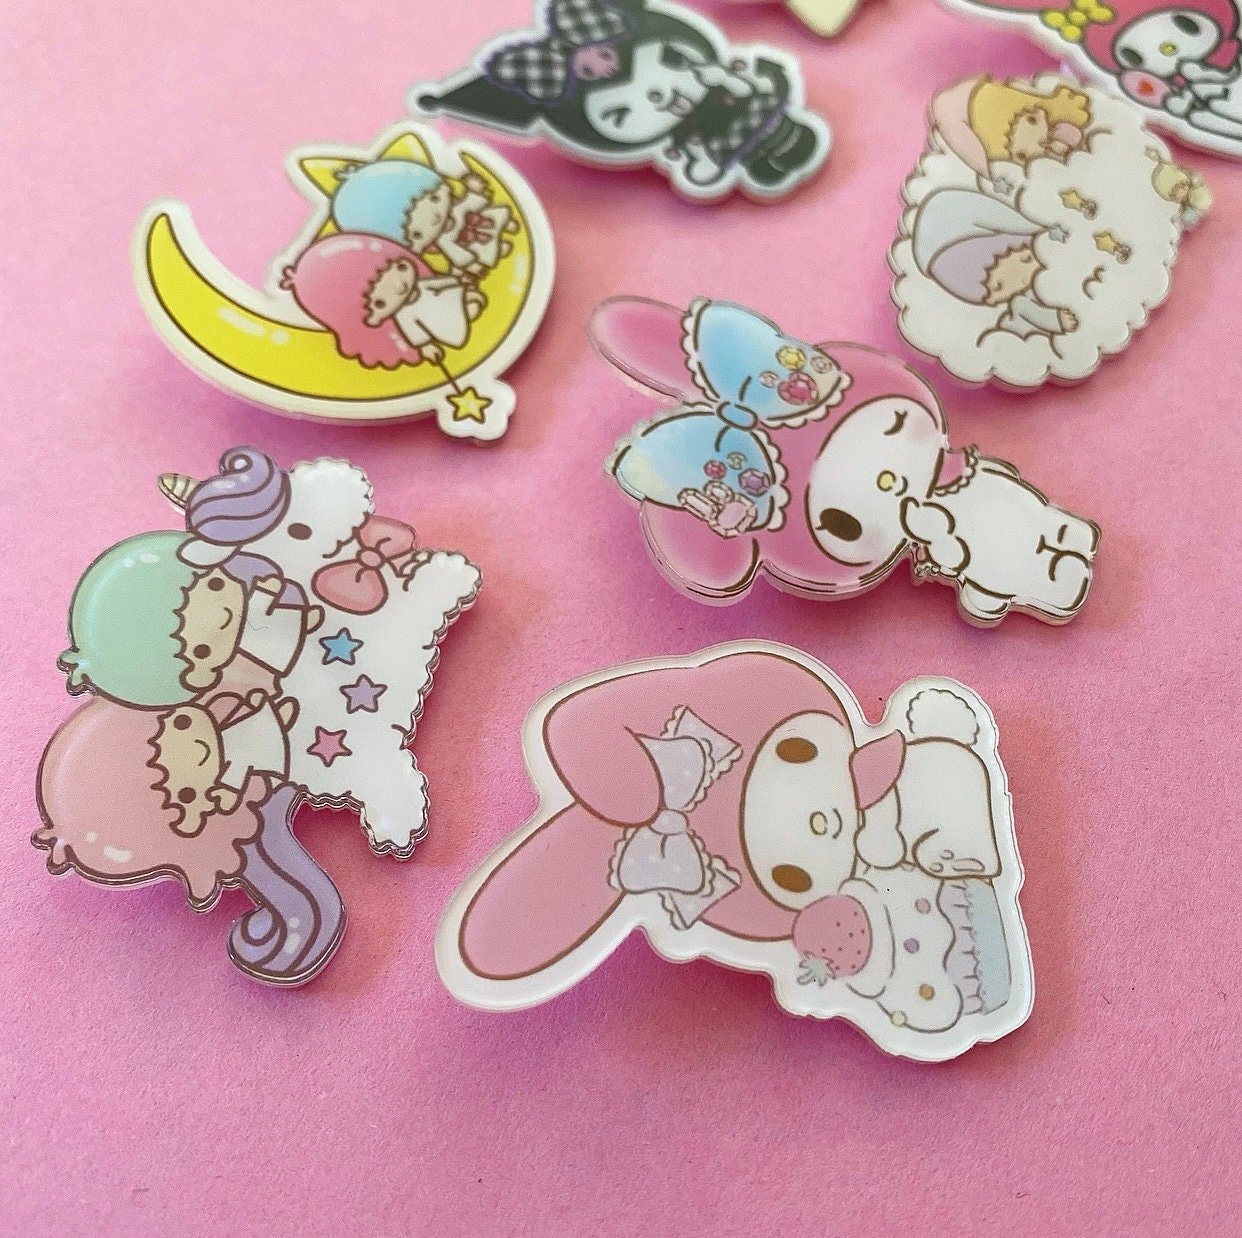 Cute Handmade Acrylic Broach Badge Clip Pin Accessories Kawaii Characters  Japan Kitty Anime Melody Harajuku Stars Sweet Gift Ideas 